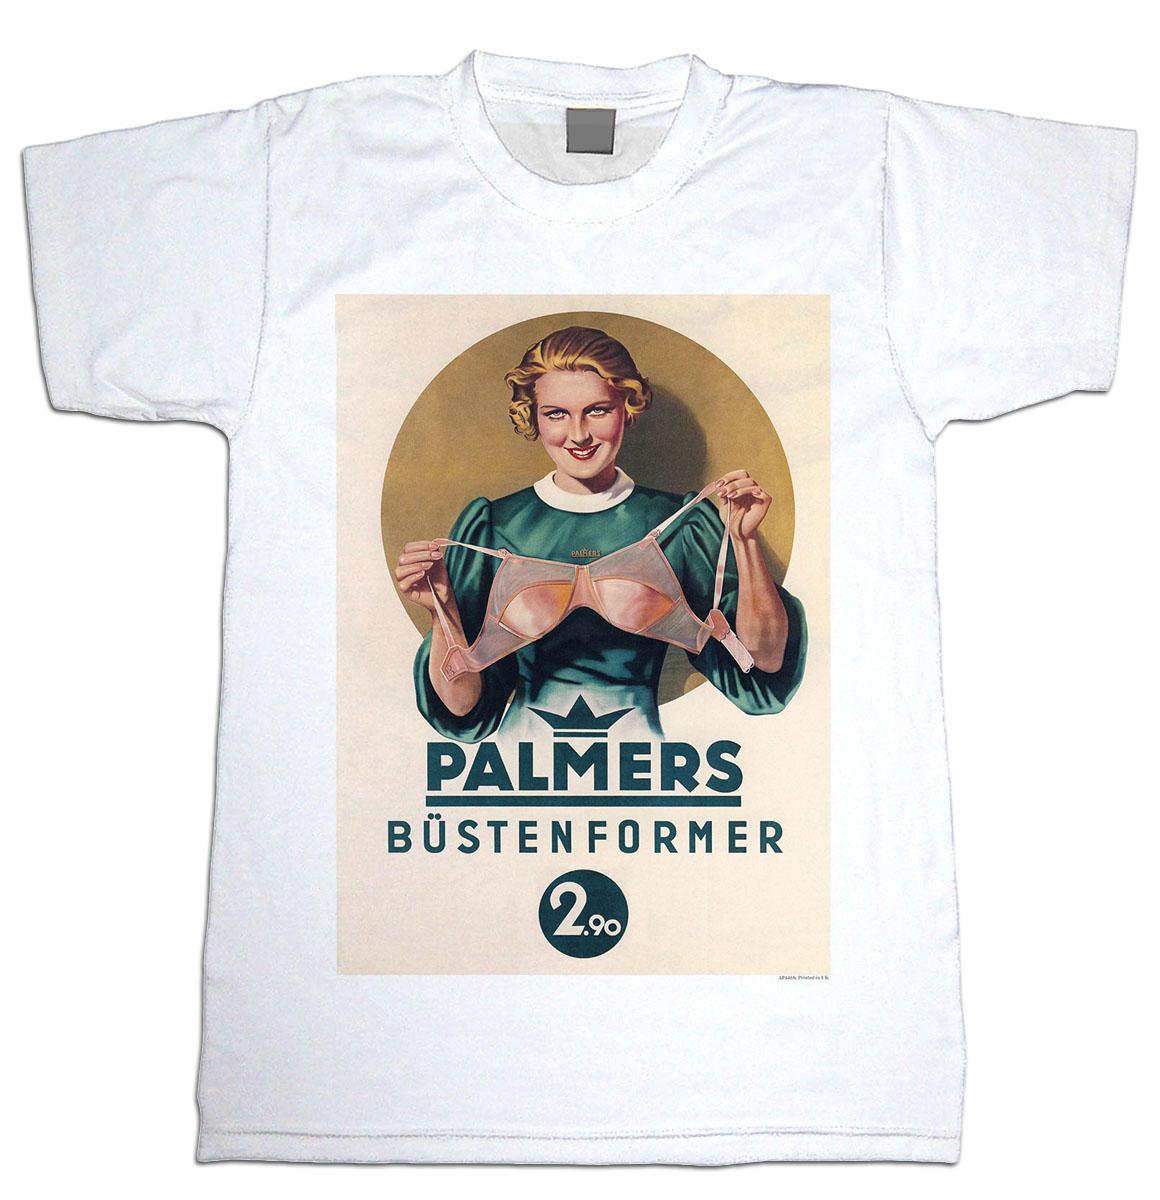 Palmers Bustenformer, Vintage Bra Advert : Art Print £7.99 / Framed Print  £22.99 / T-Shirt £12.99 / Shopping Bag £8.99